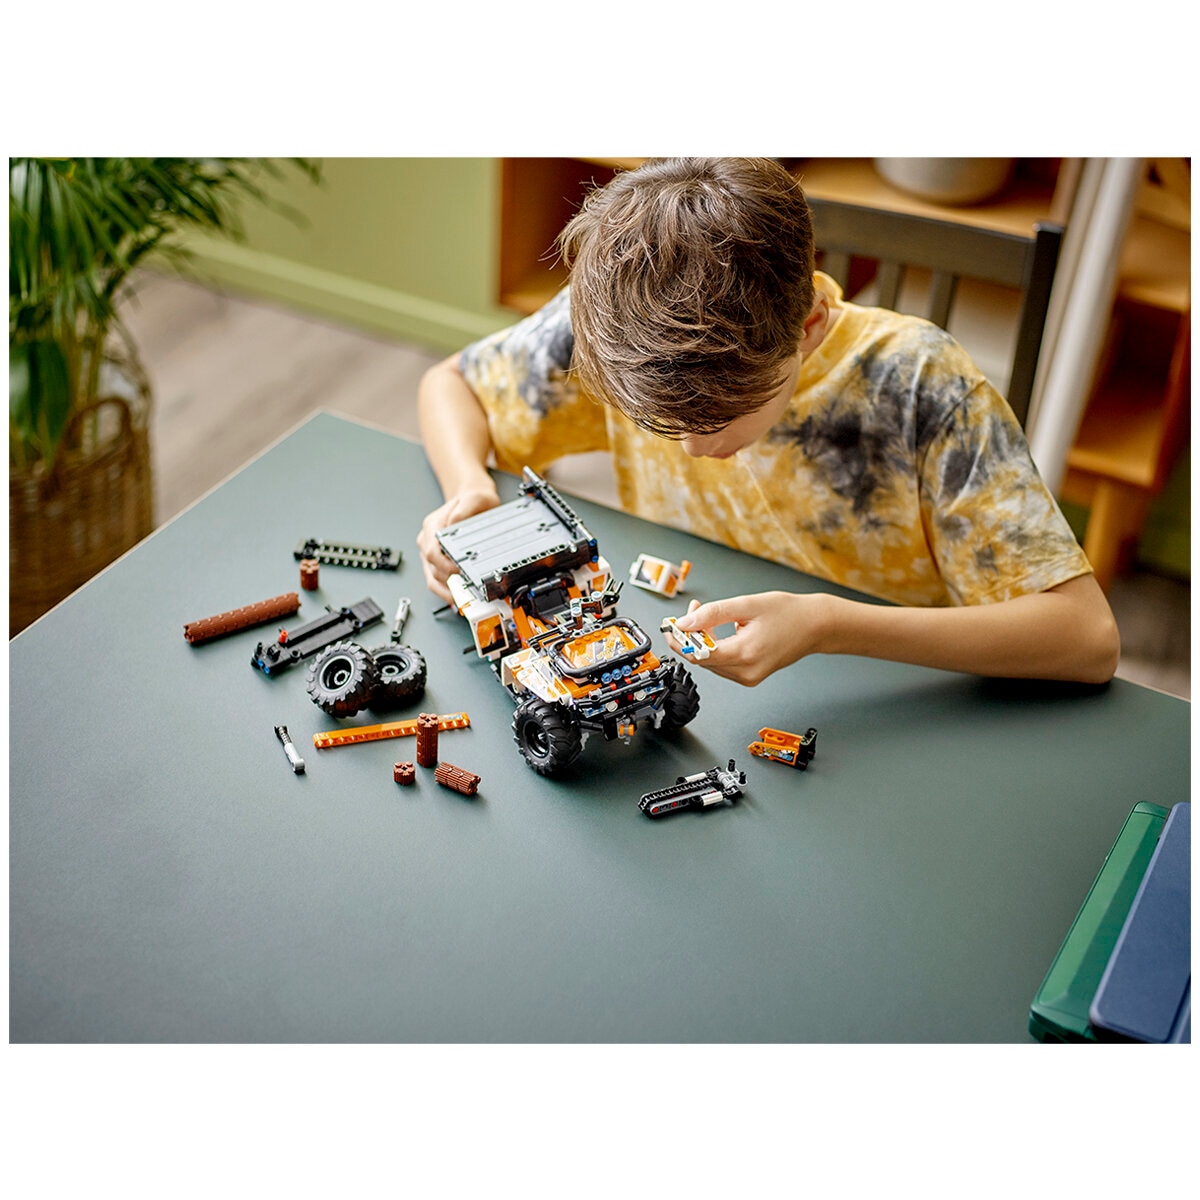 LEGO Technic All-Terrain Vehicle 42139